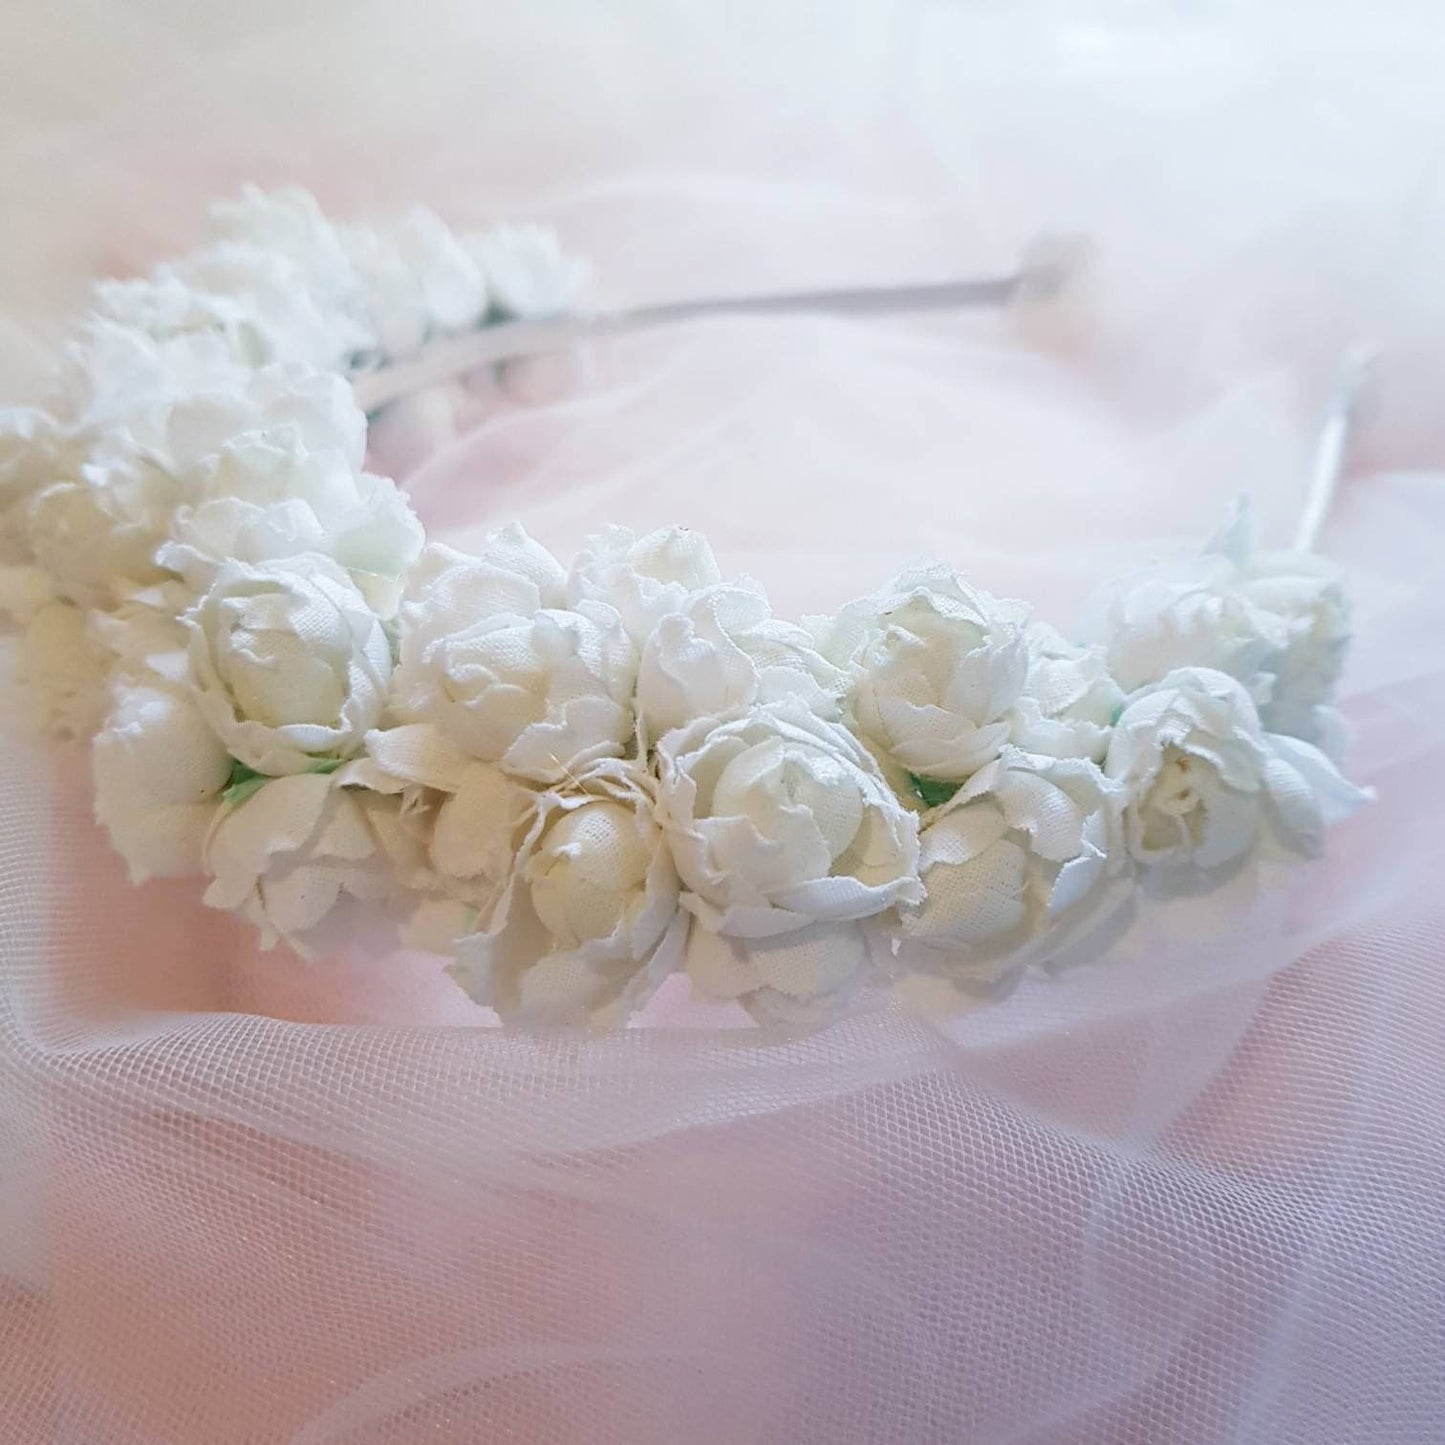 LA ROSE Headband off white flower floral headpieces crown millinery Australia wedding bridal christening baptism hair accessory flowers